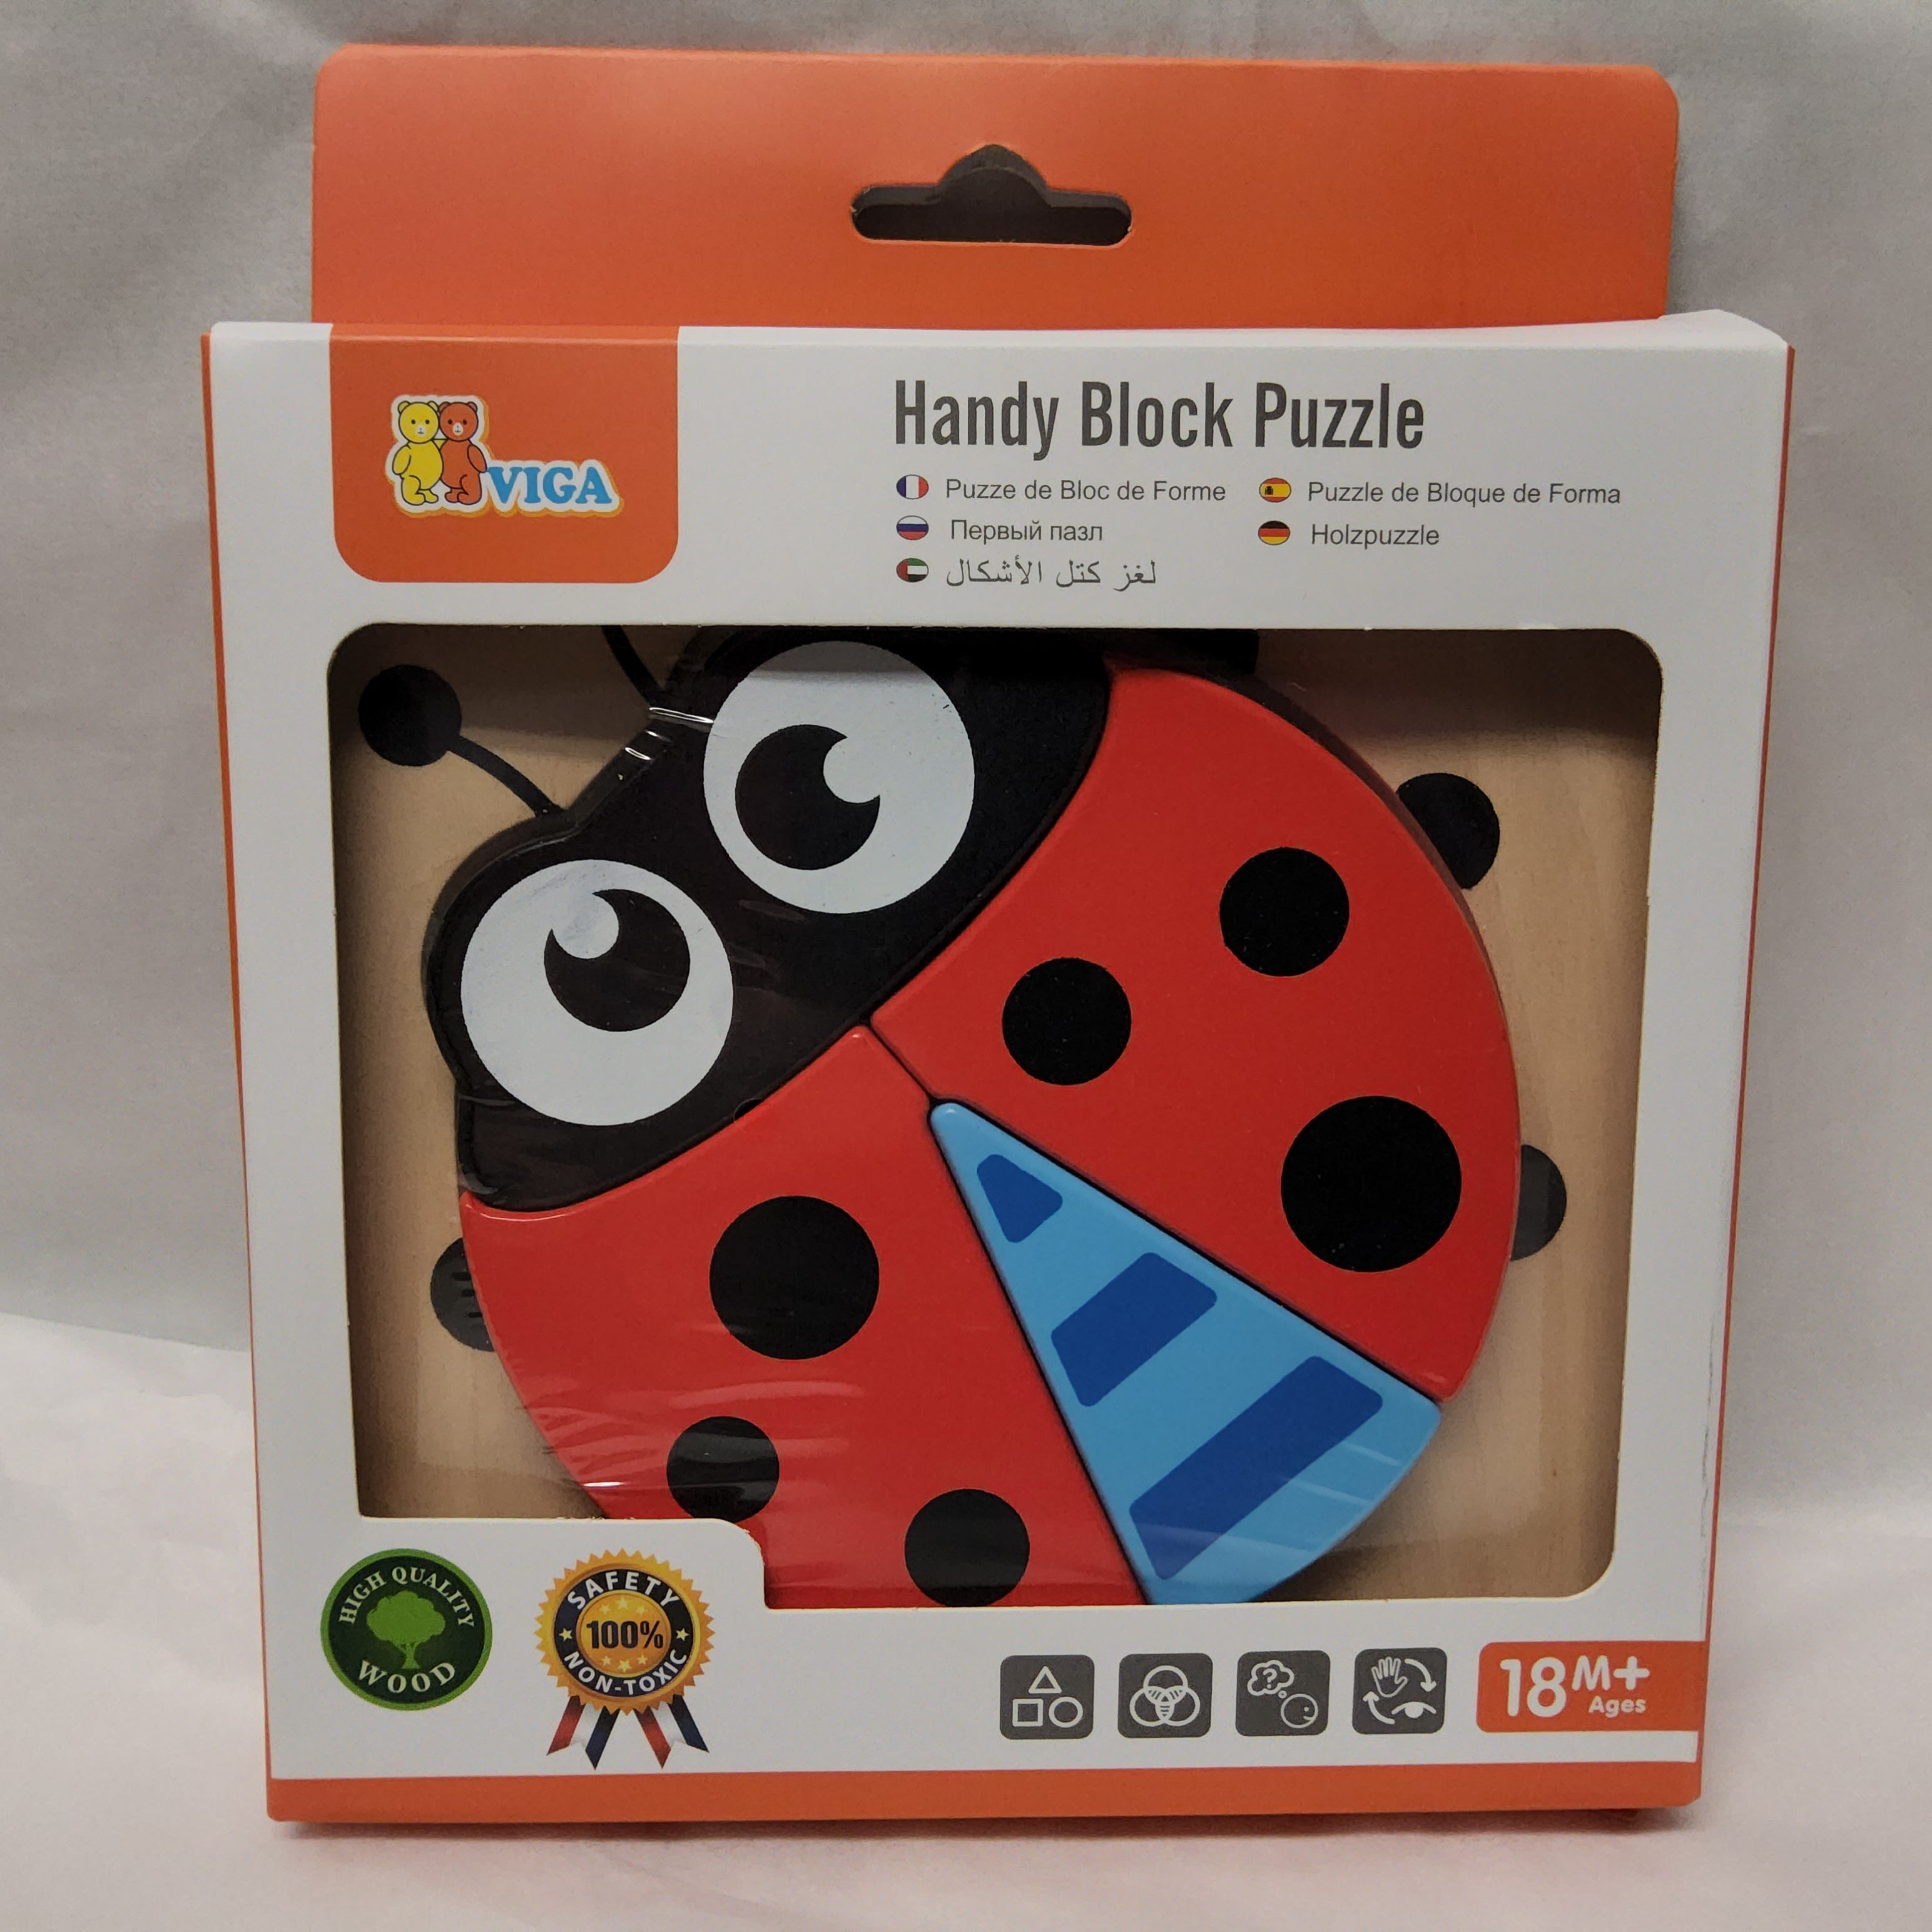 Handy Block Puzzle - Ladybug 501686